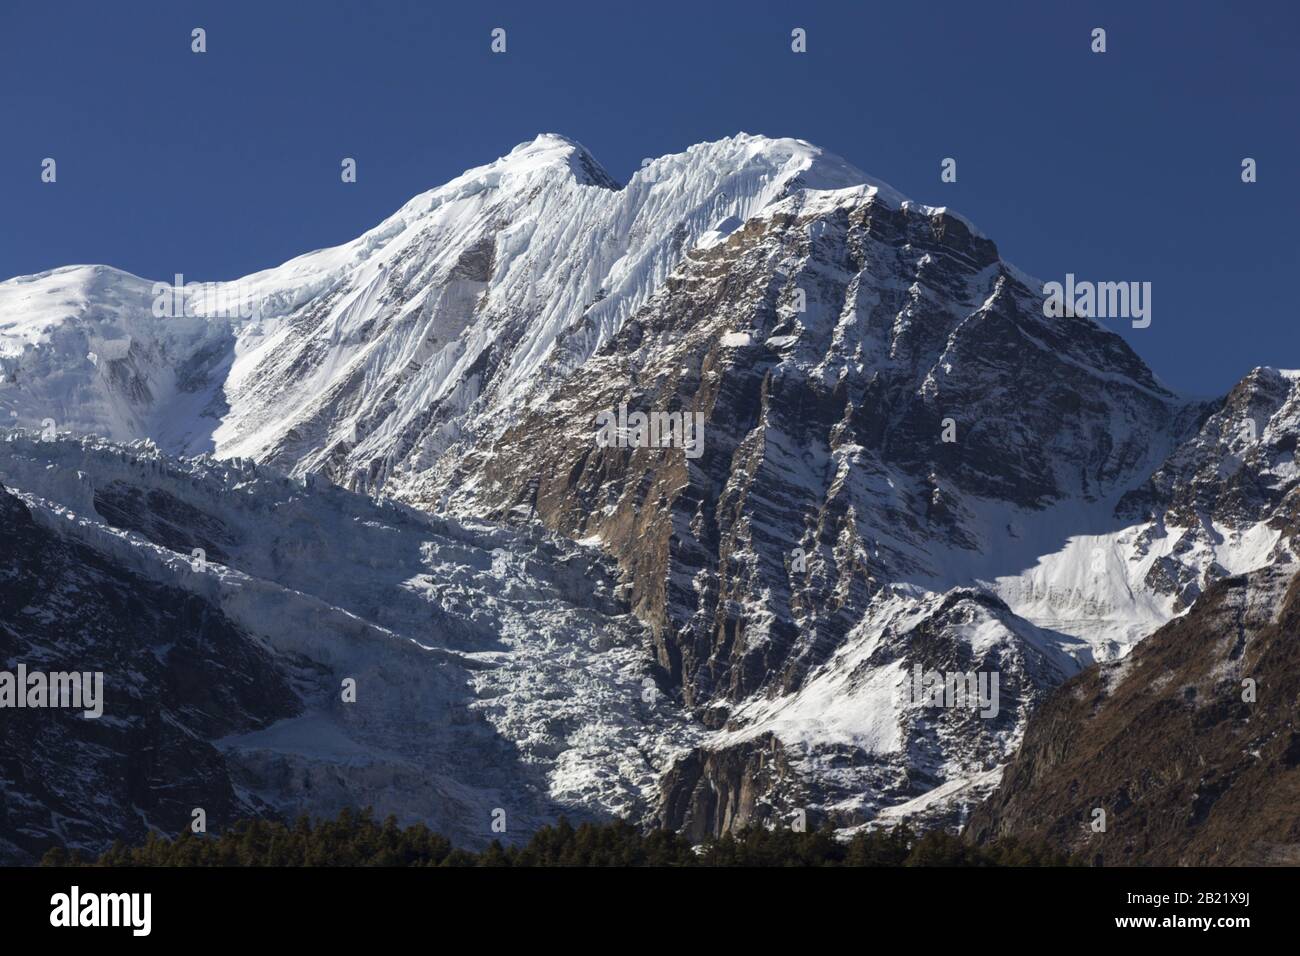 Snowy Ganggapurna Mountain Peak Range and Glacier Landscape View above Manang Village in Nepal Himalaya Mountains on Annapurna Circuit Hiking Trek Stock Photo